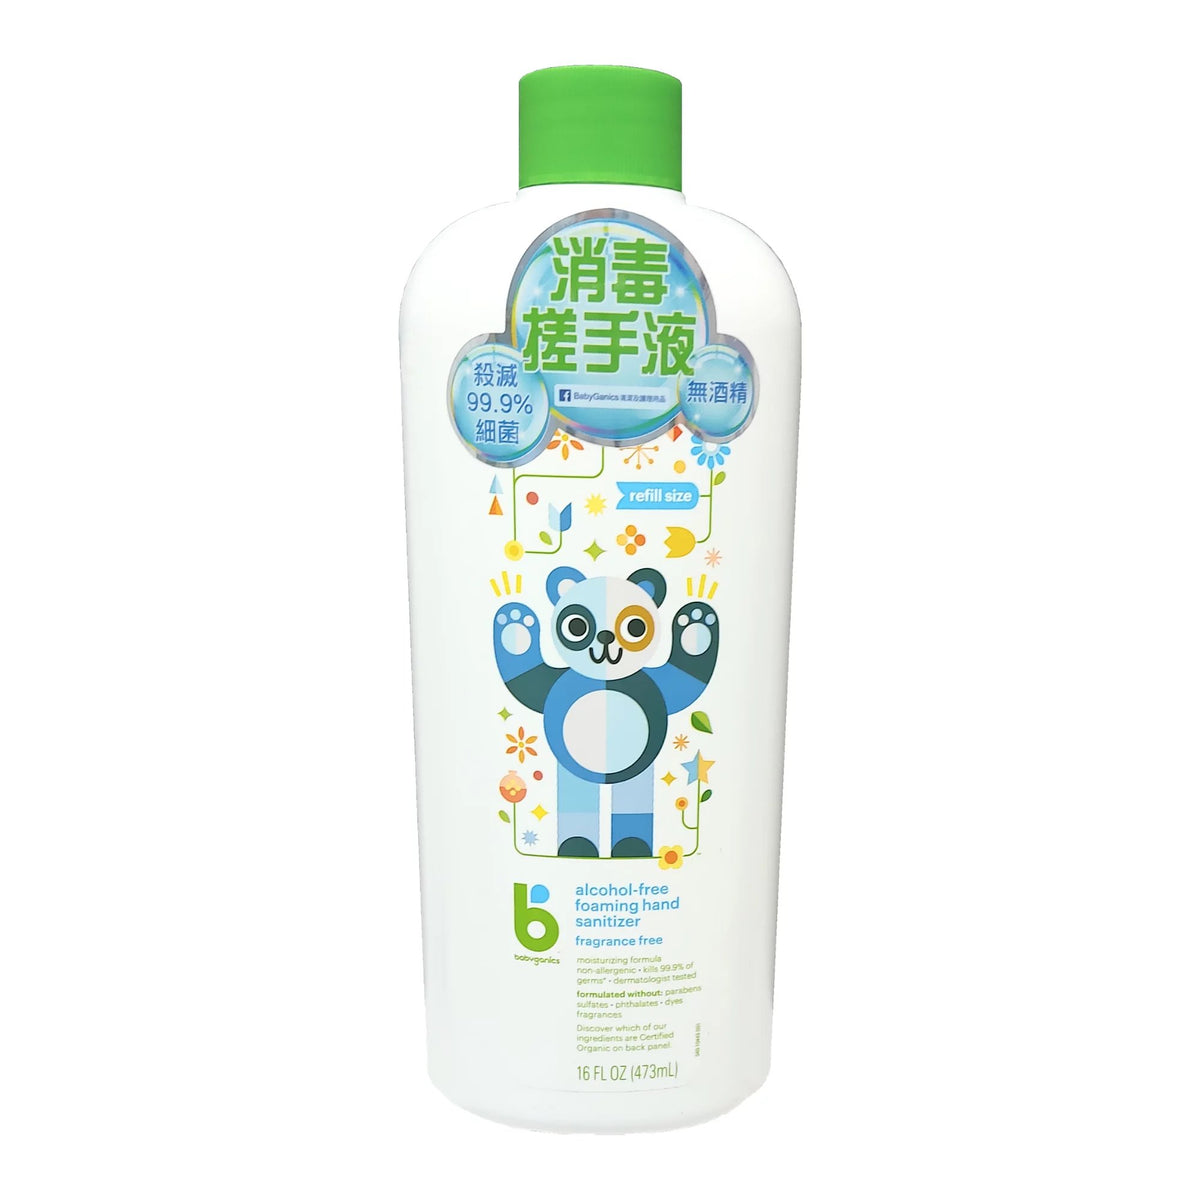 babyganics-alcohol-free-foaming-hand-sanitizer-fragrance-free-473ml-refill- (1)